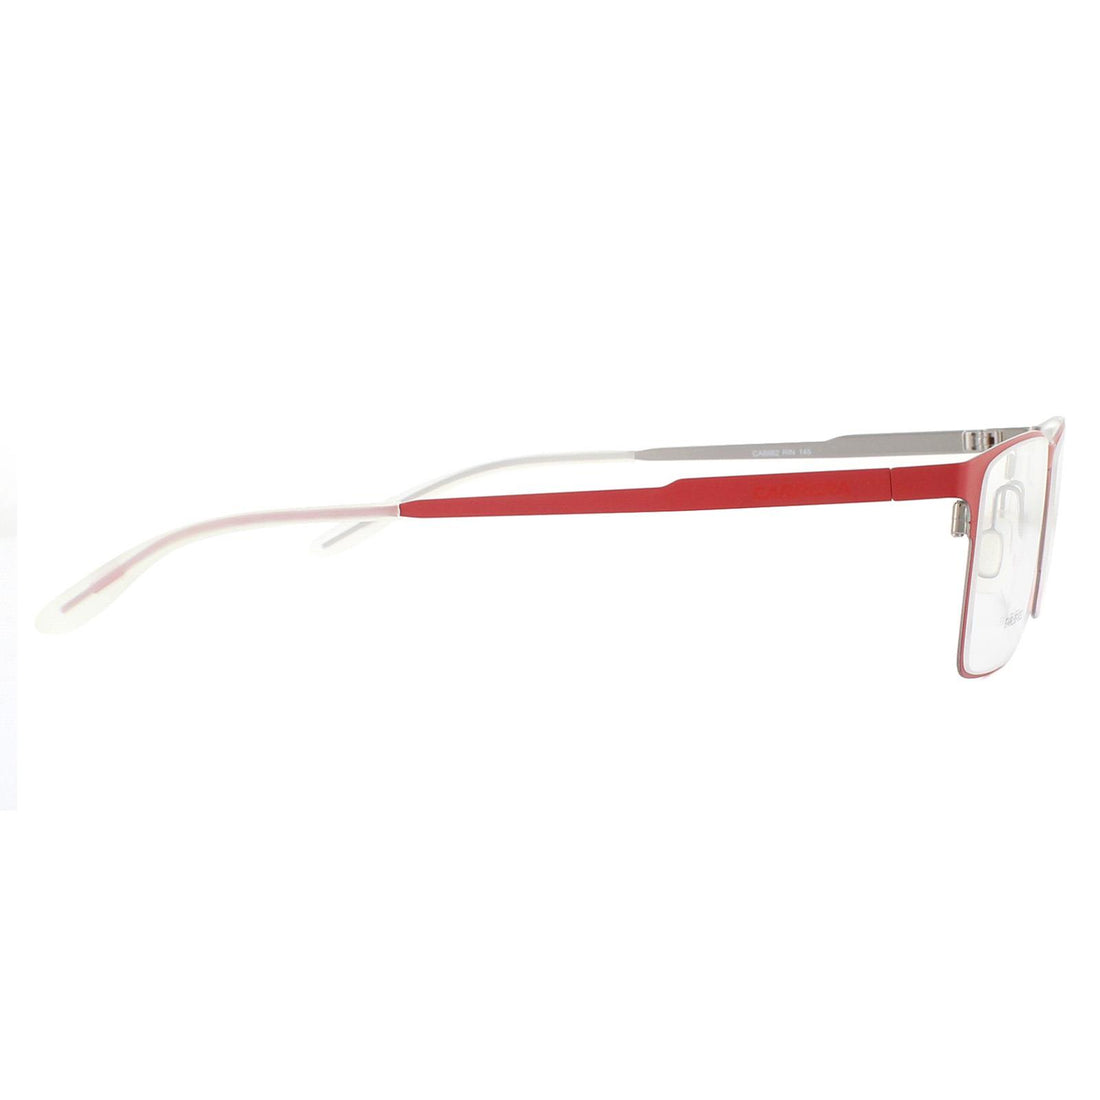 Carrera Glasses Frames CA6662 RIN Red Men